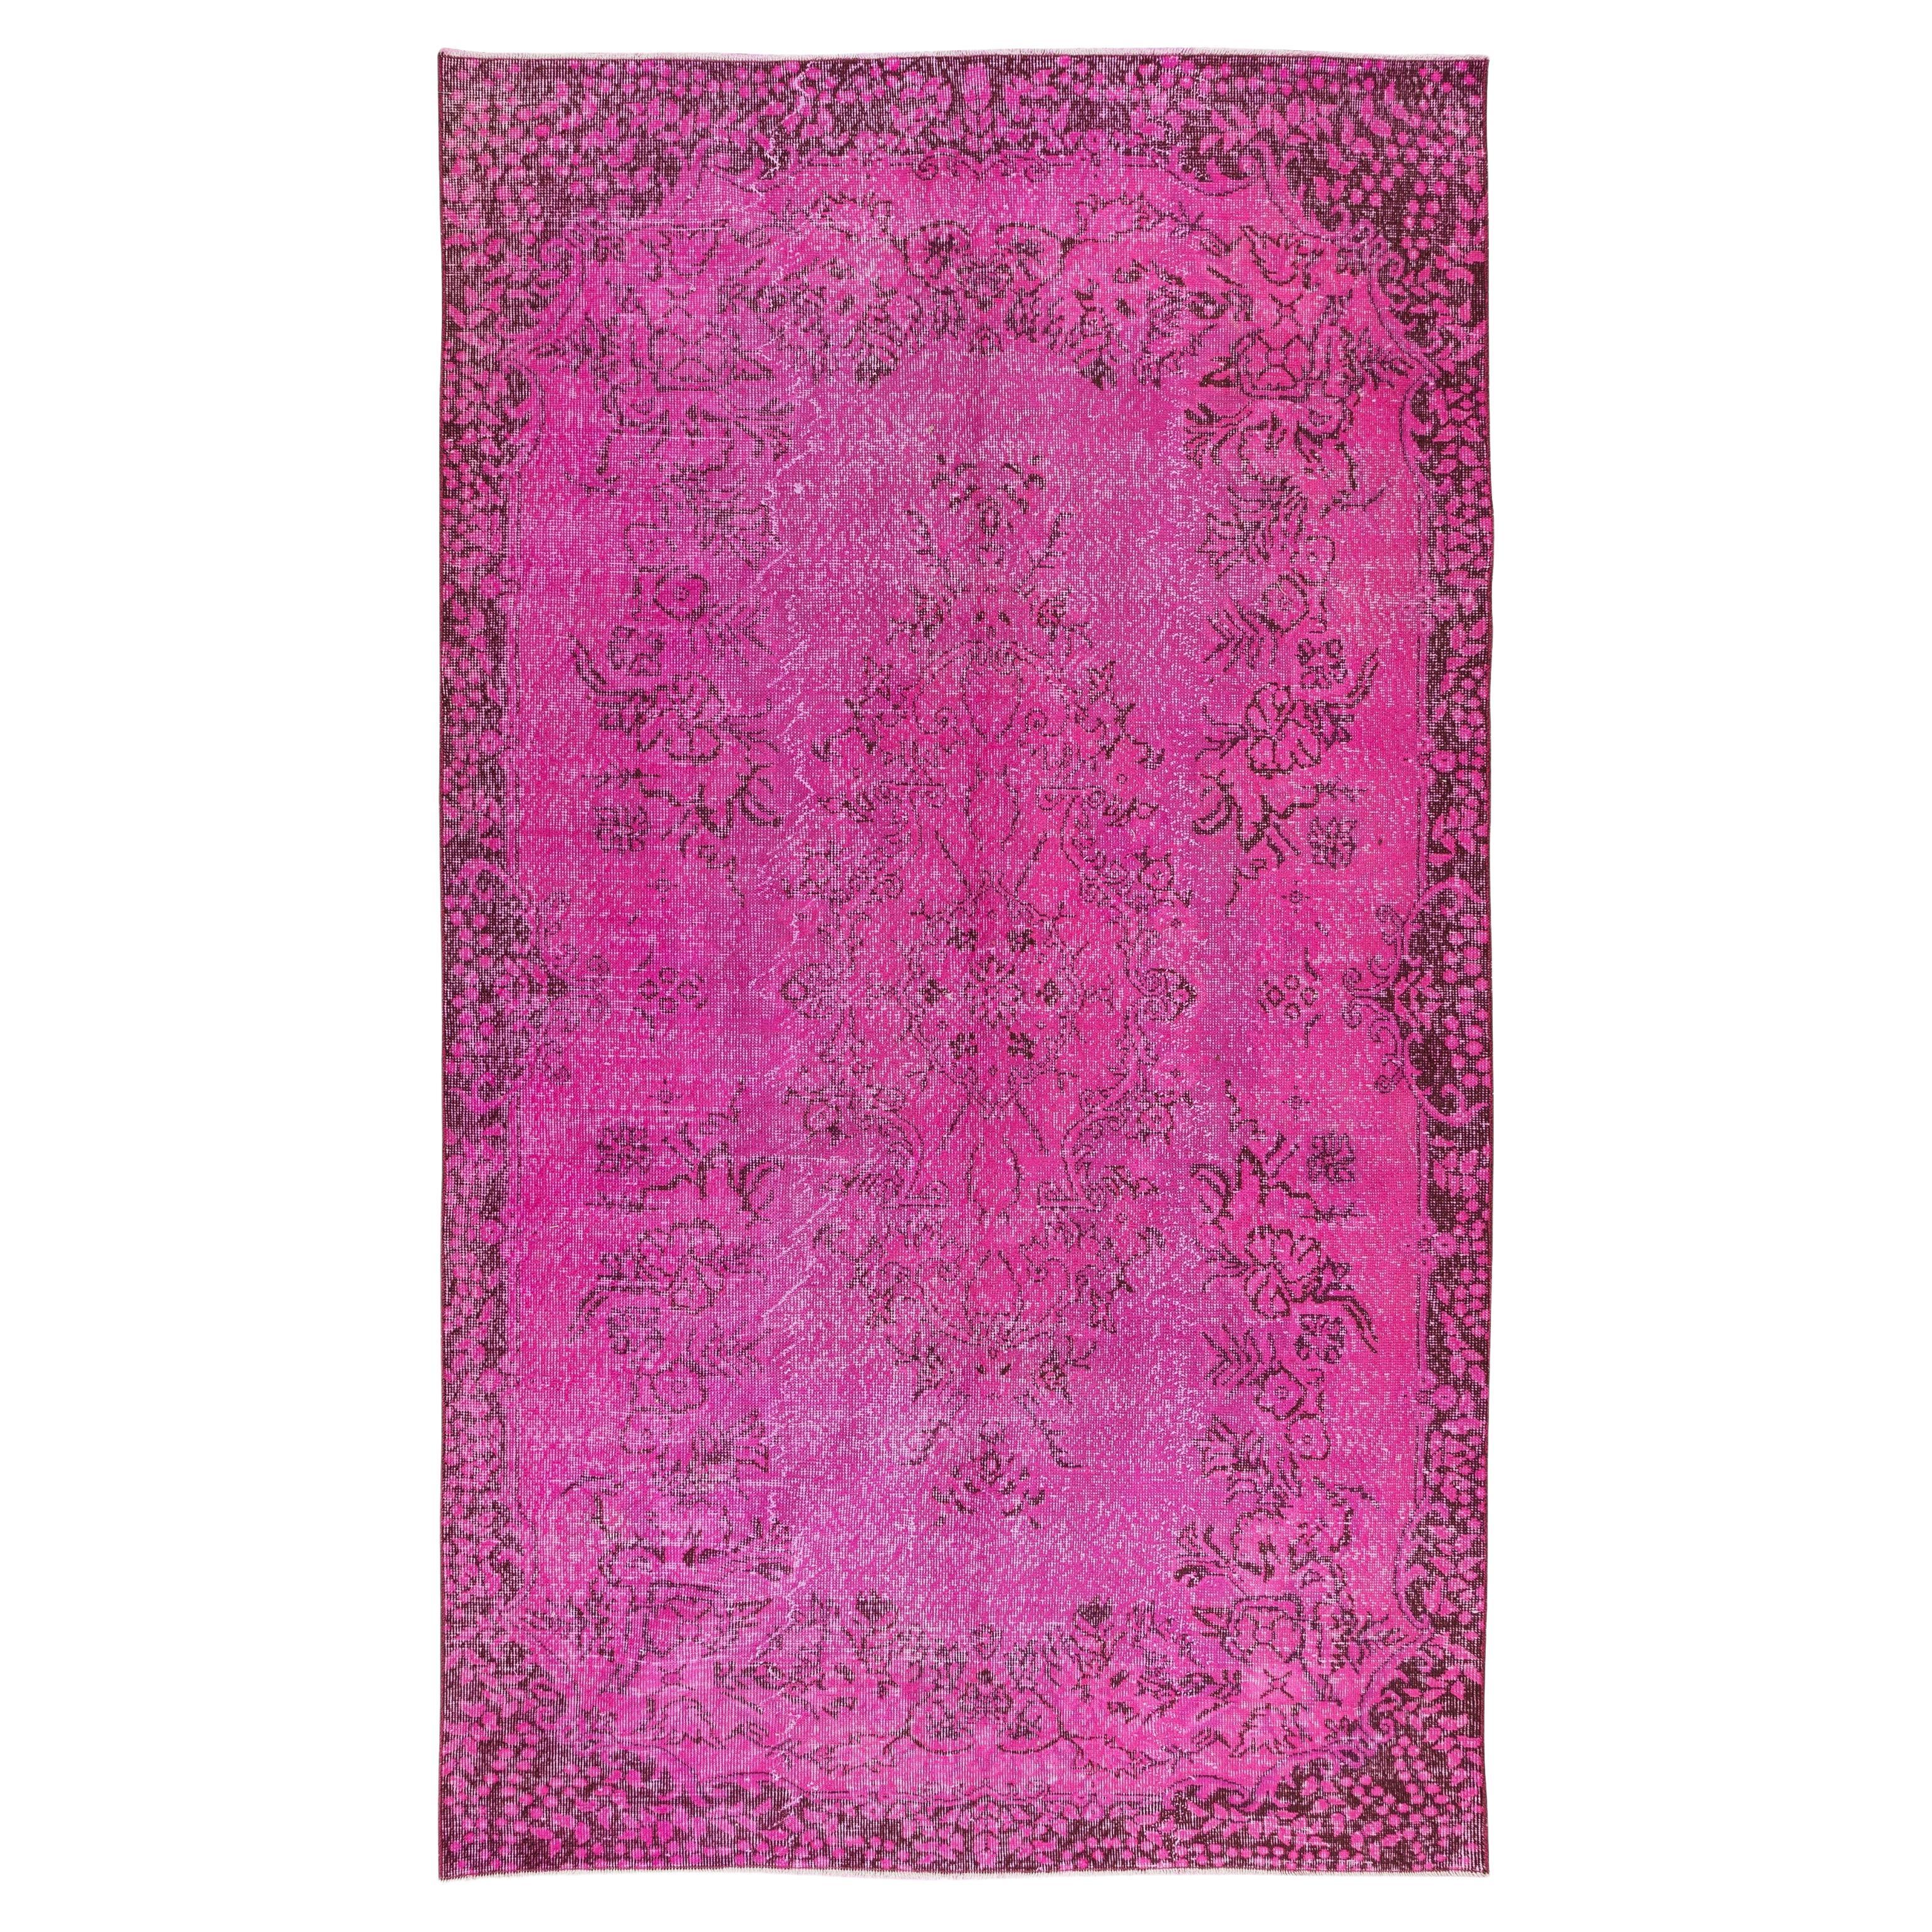 5.6x9.8 Ft Vintage Handmade Turkish Area Rug in Pink with Medallion Design